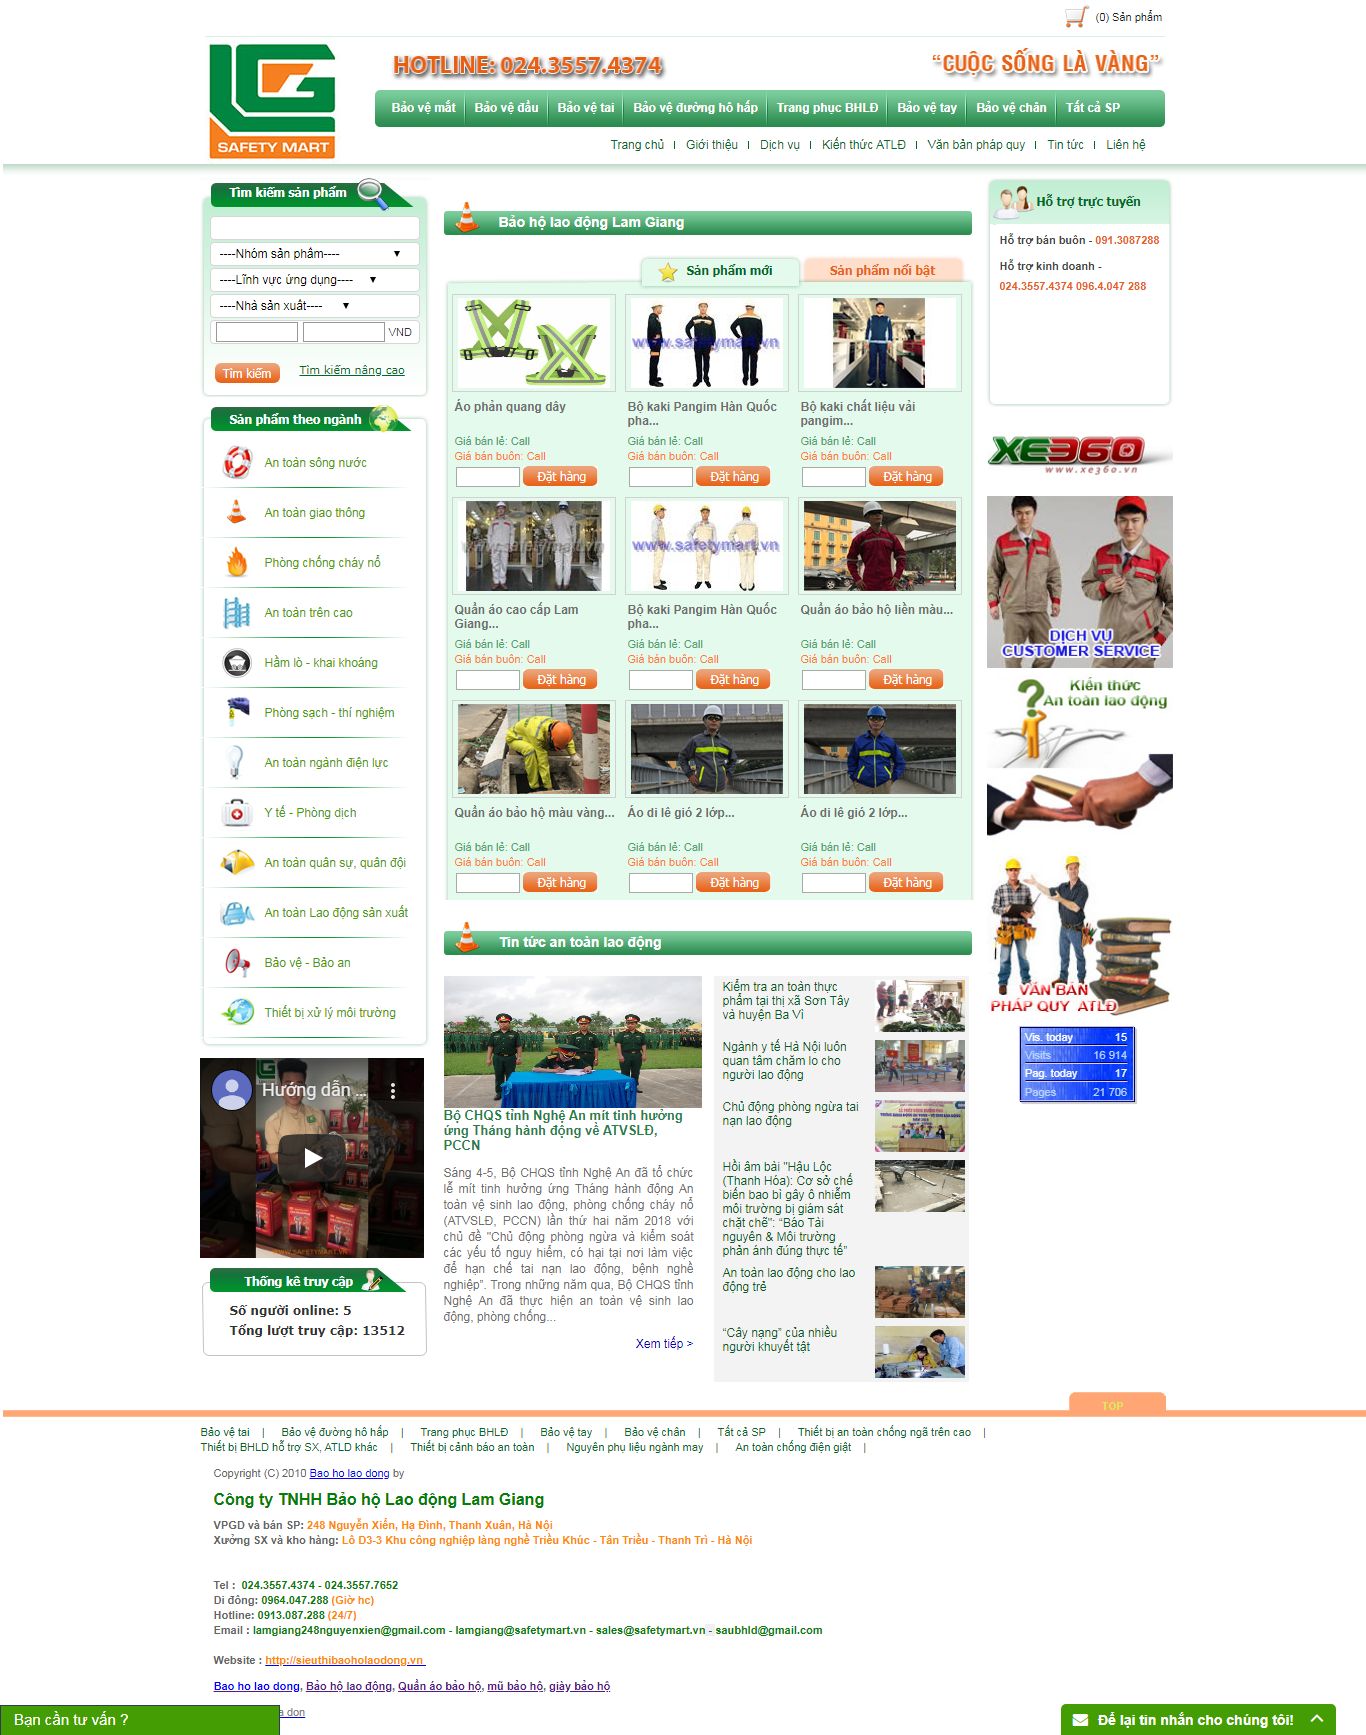 Thiết kế Website bảo hộ lao động - www.sieuthibaoholaodong.vn